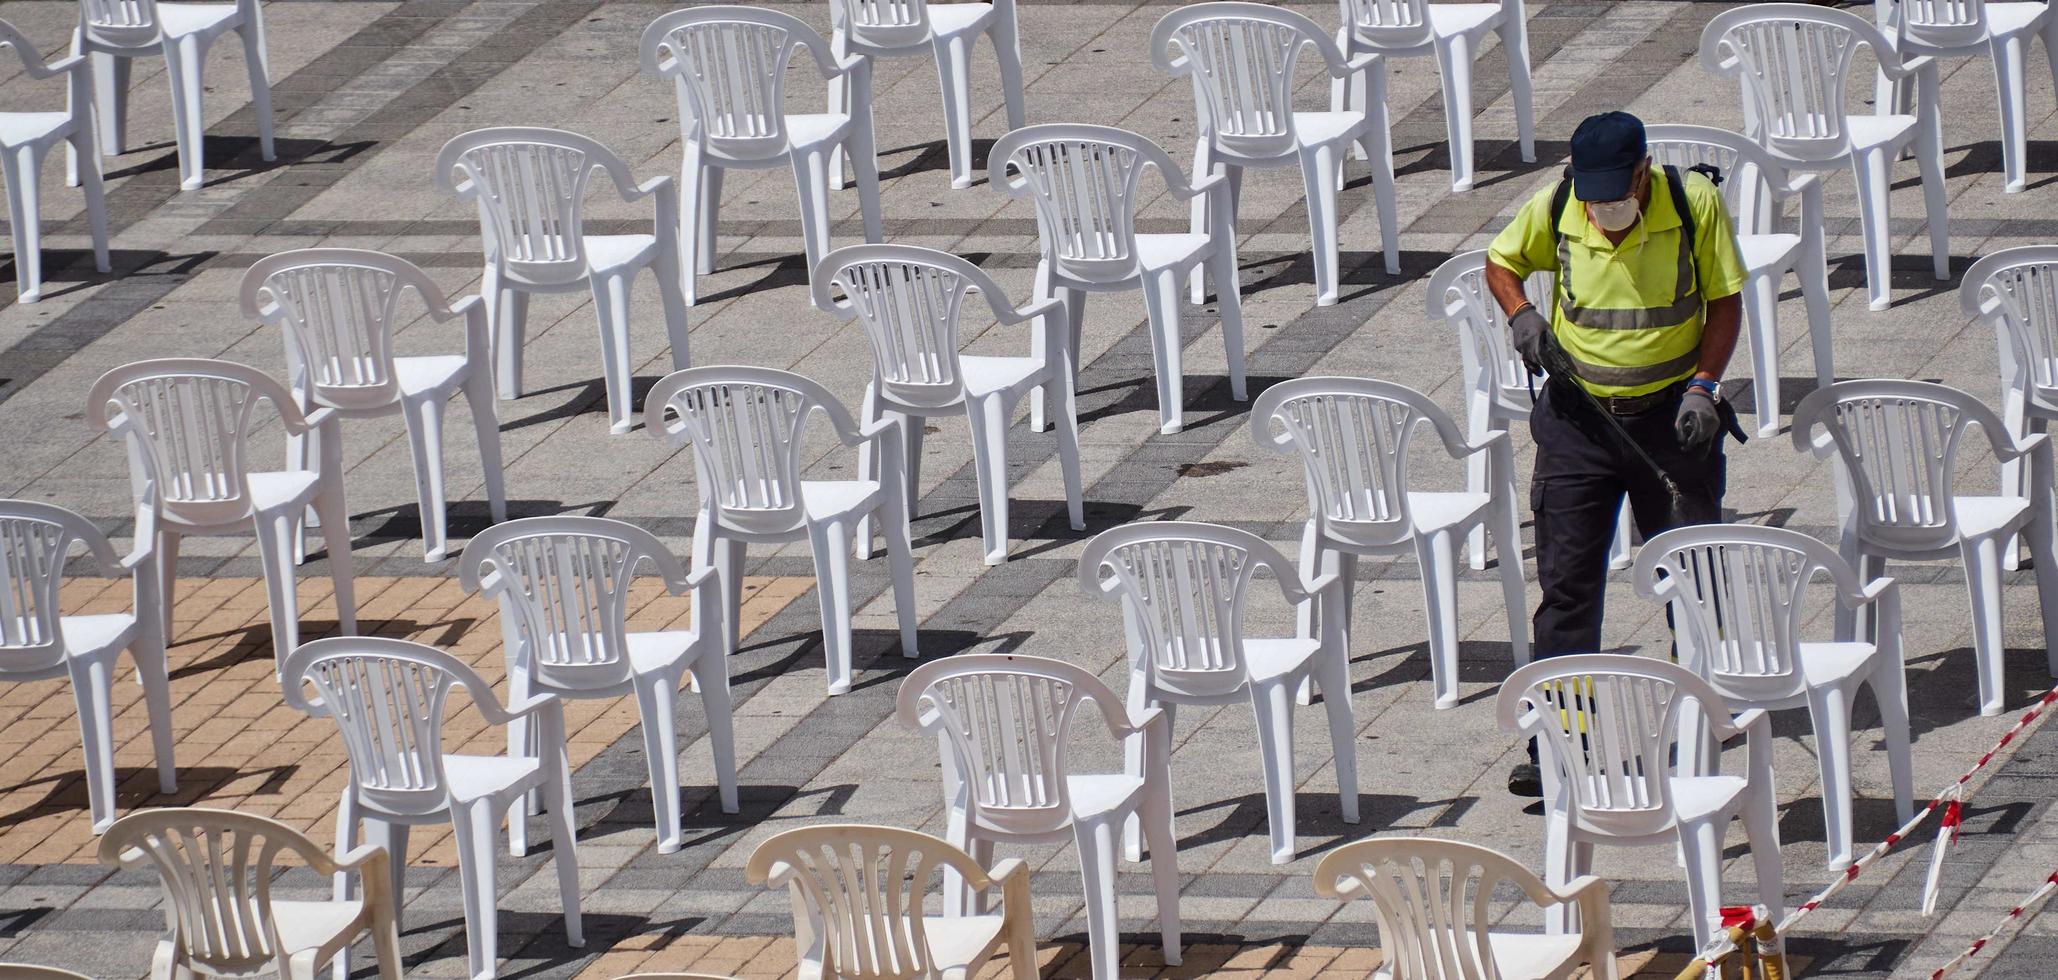 Spain, Aug 2020 - Man sanitizing chairs photo